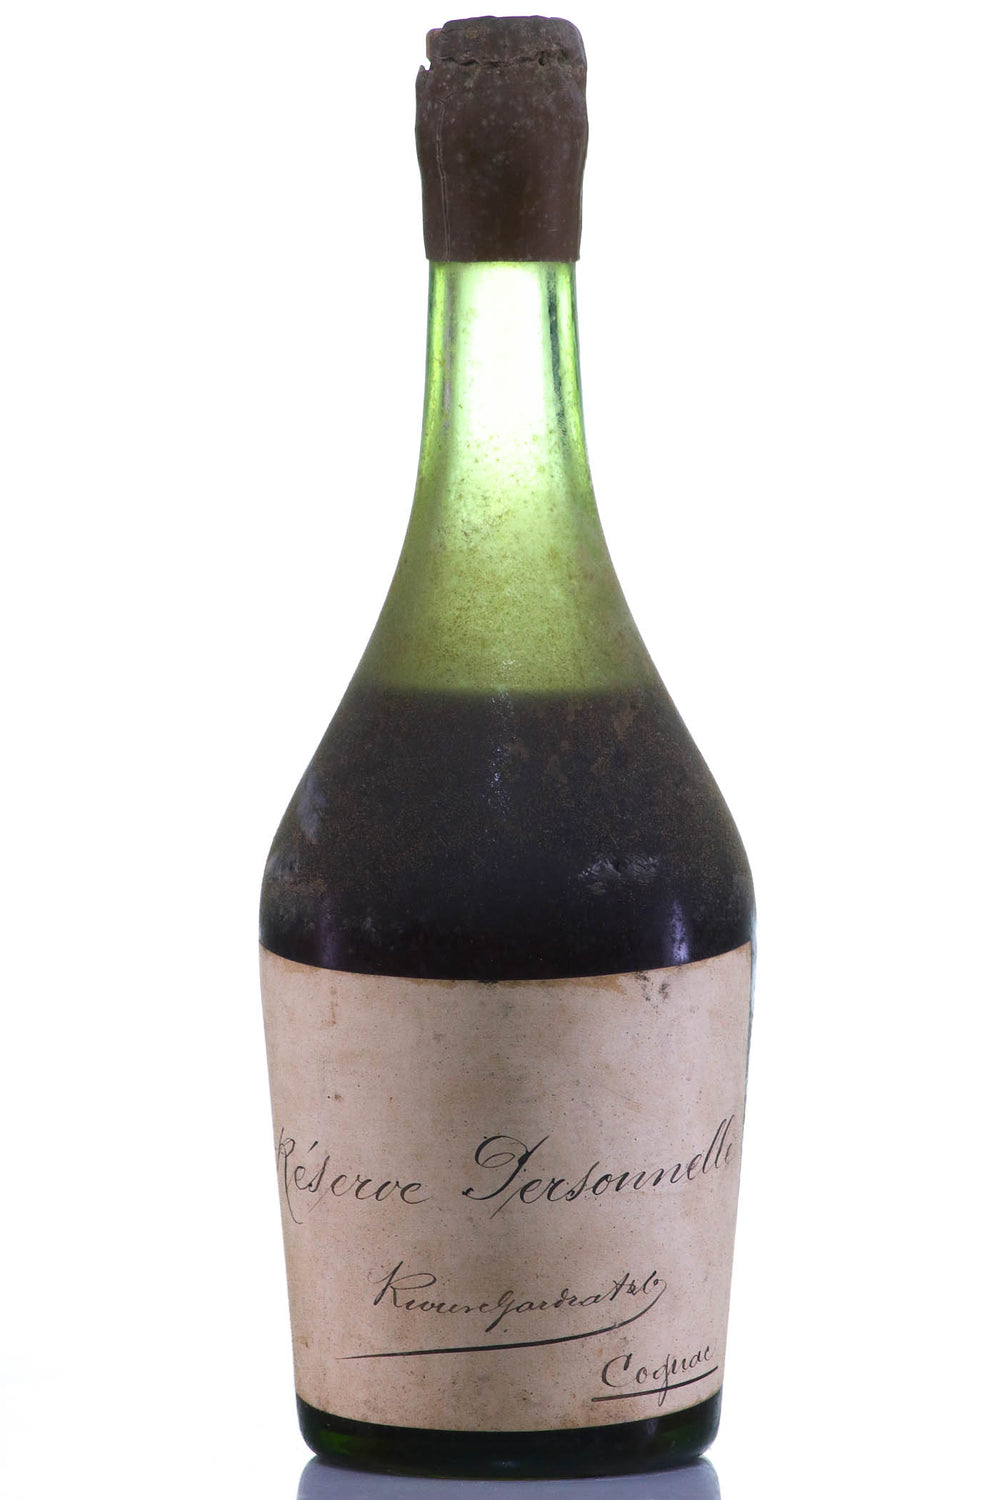 1920 Riviere Gardrat Reserve Personelle Cognac - Rue Pinard